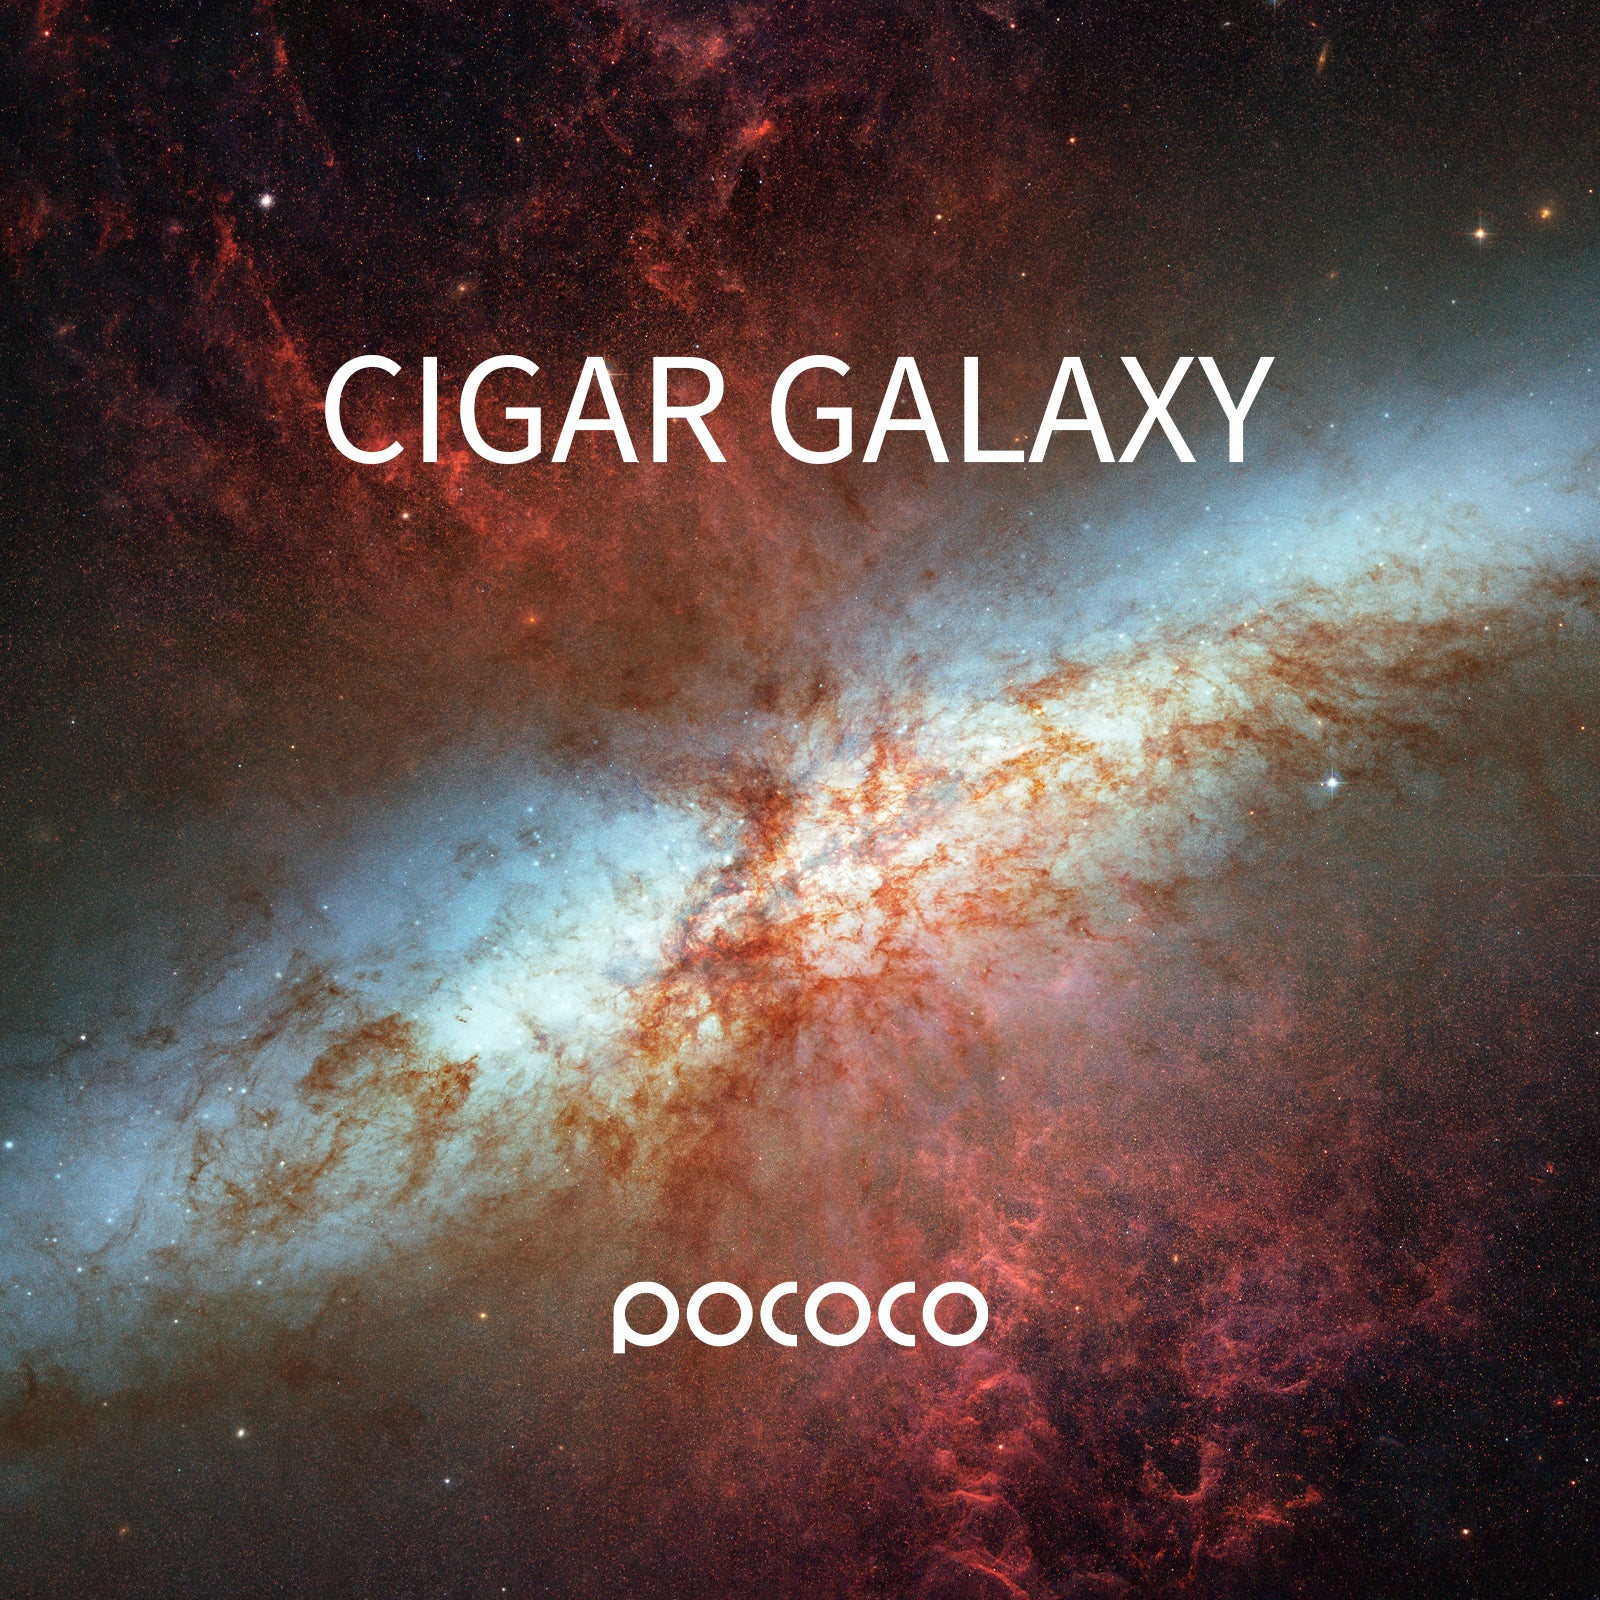 New POCOCO Galaxy Projector, Home Planetarium Star Projector for